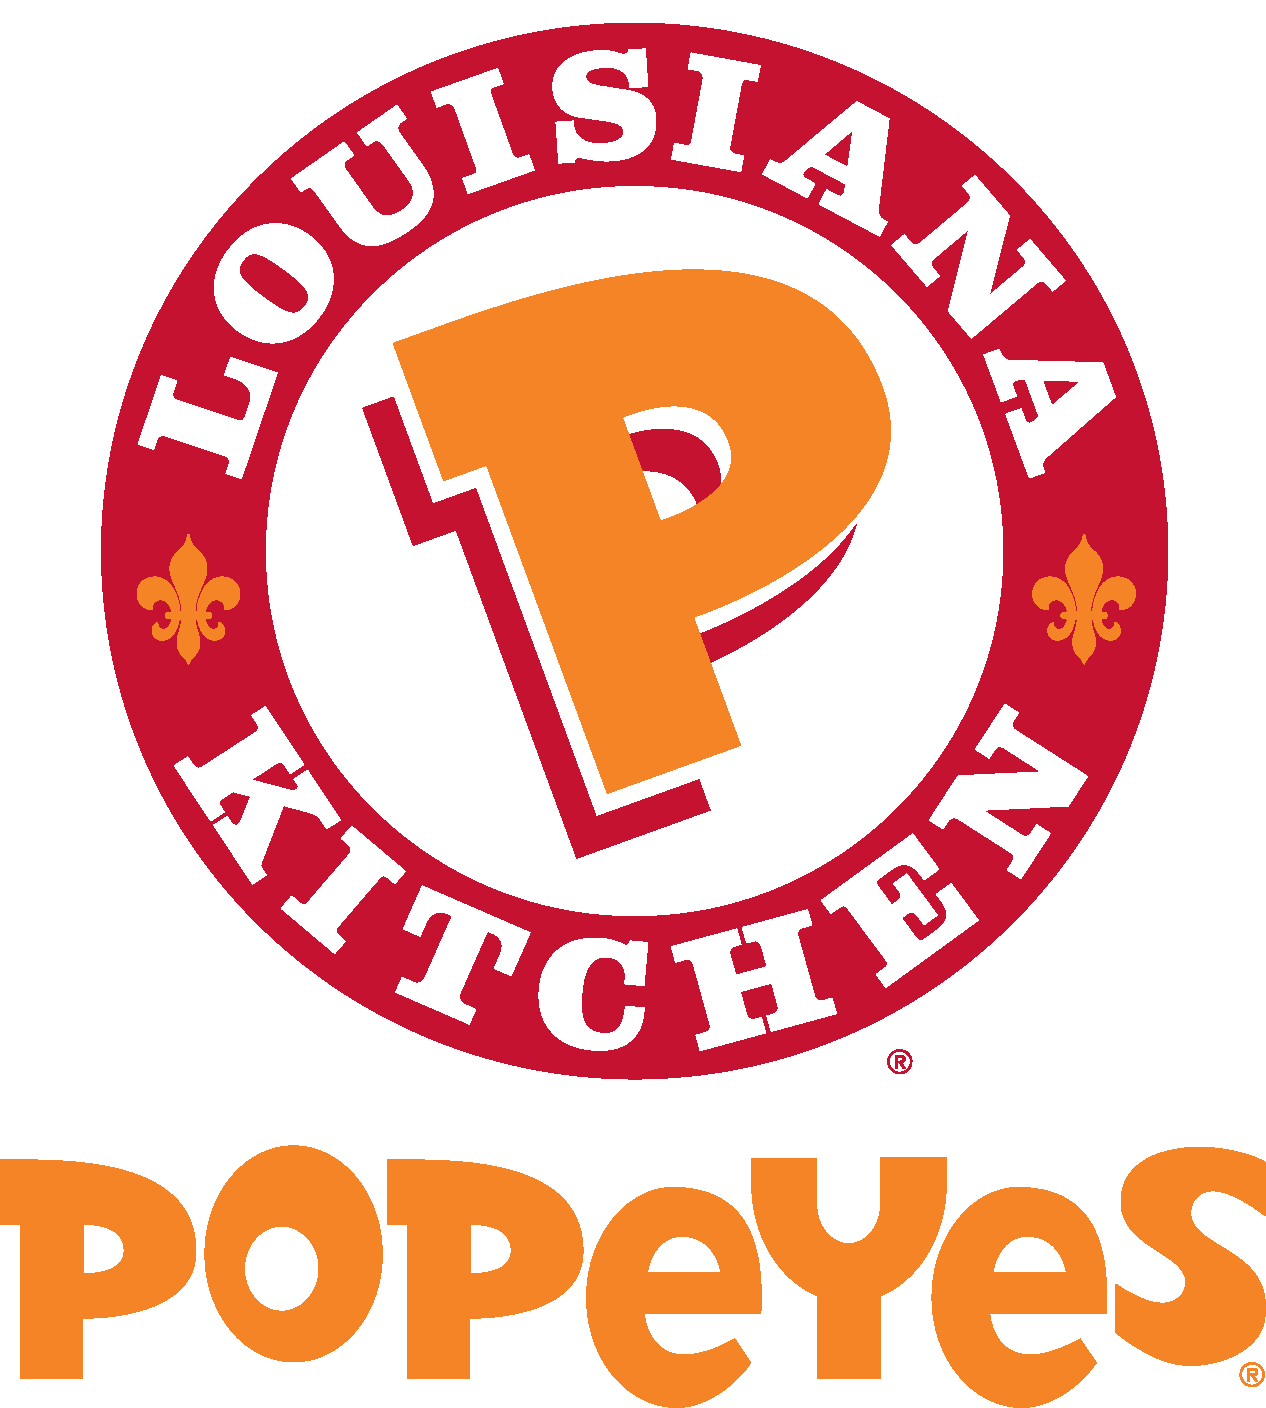 Popeyes Logo png